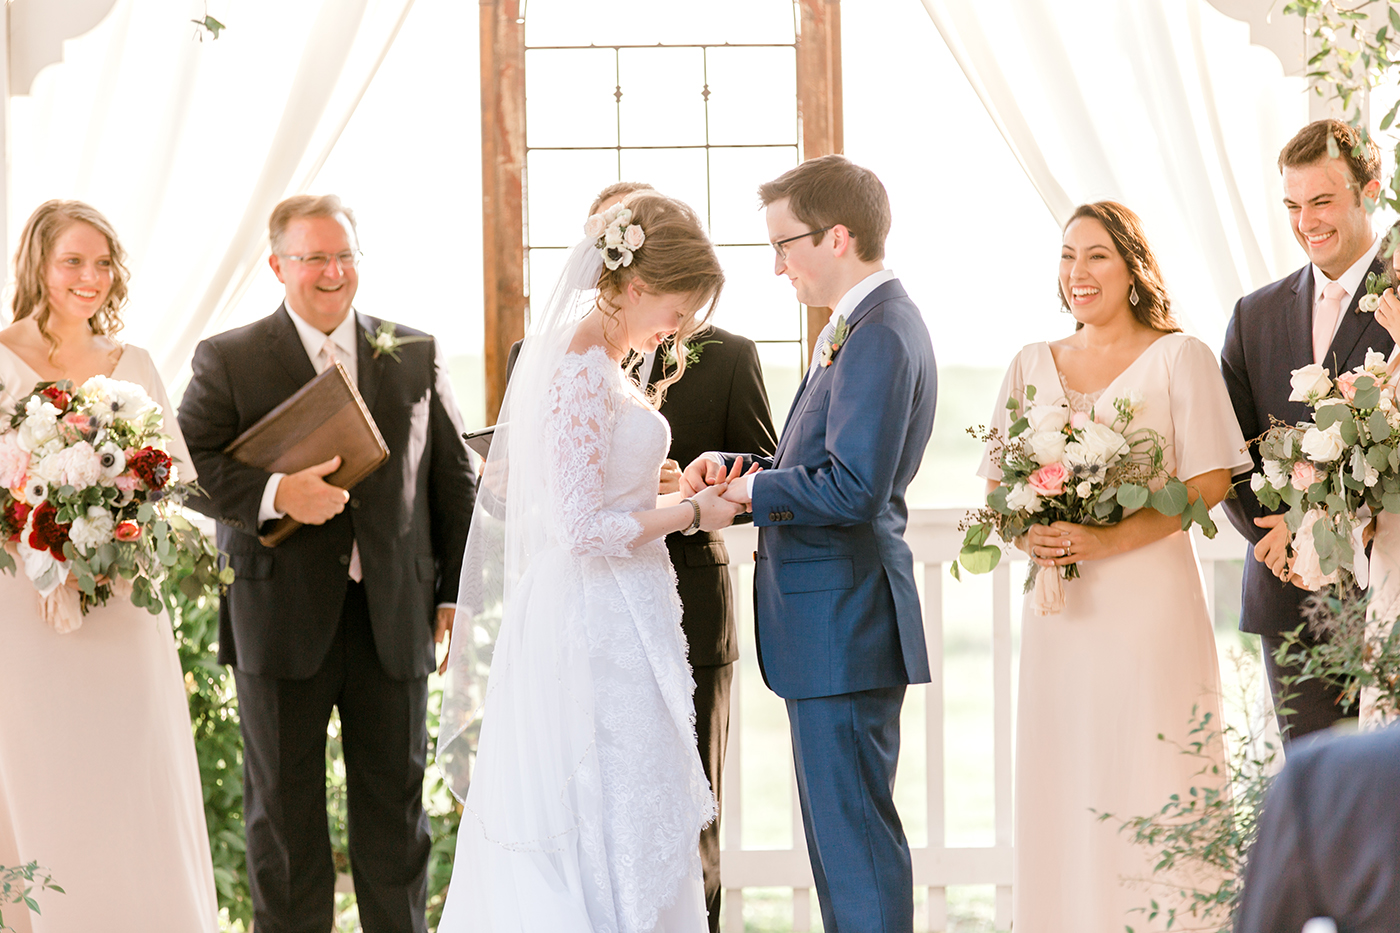 DFW Wedding Photographer | Laylee Emadi Photography | Leah + Ethan